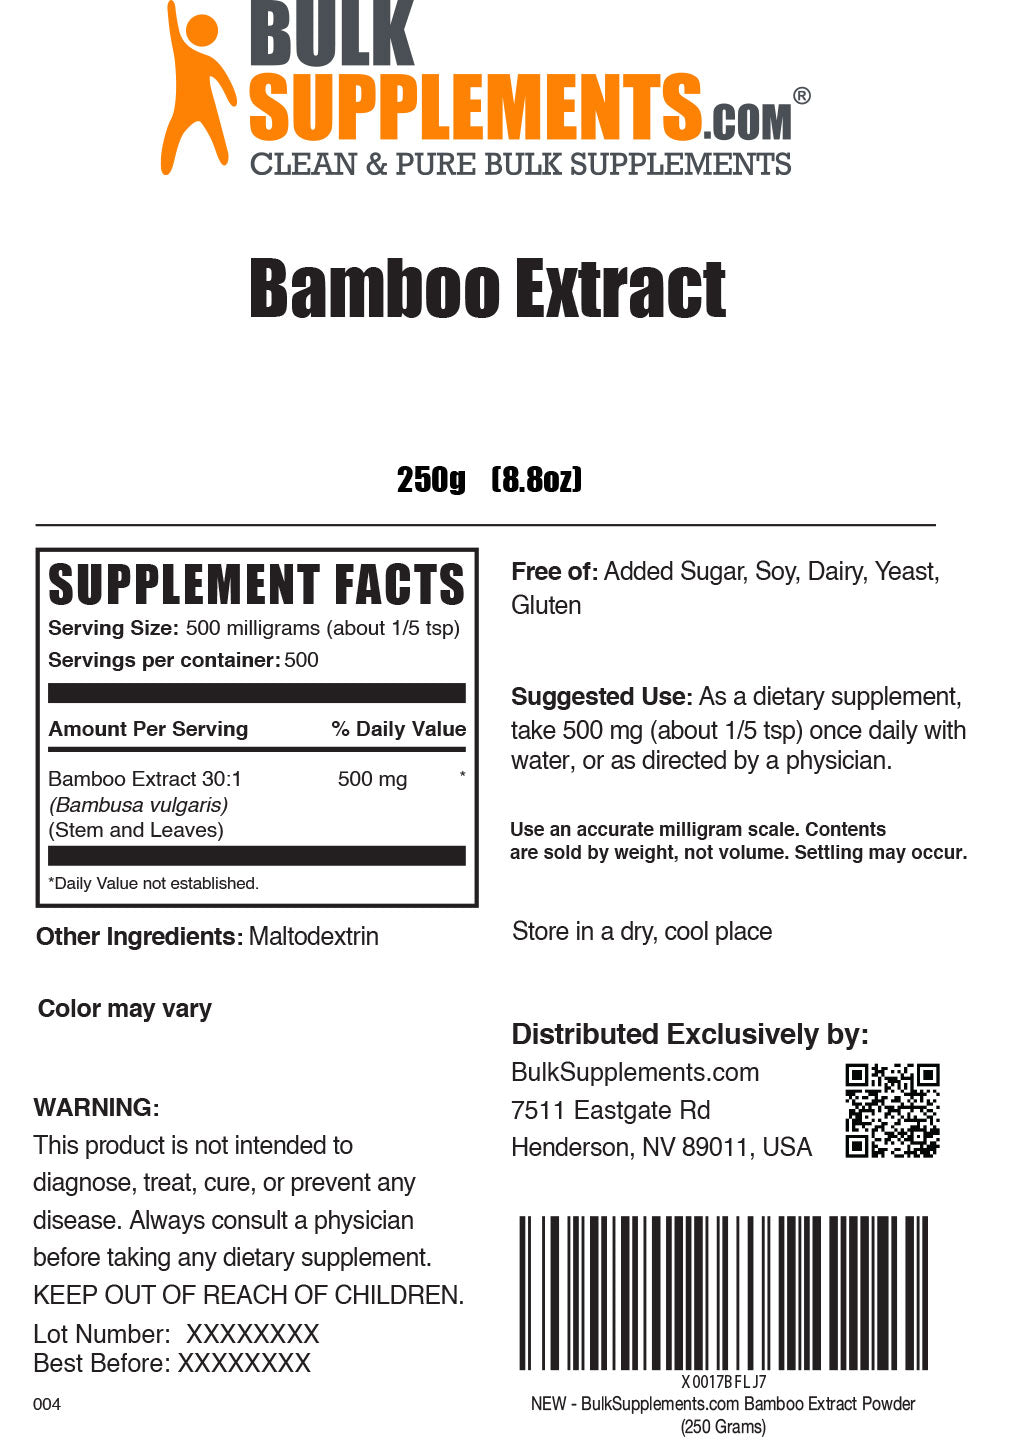 Bamboo Extract Powder